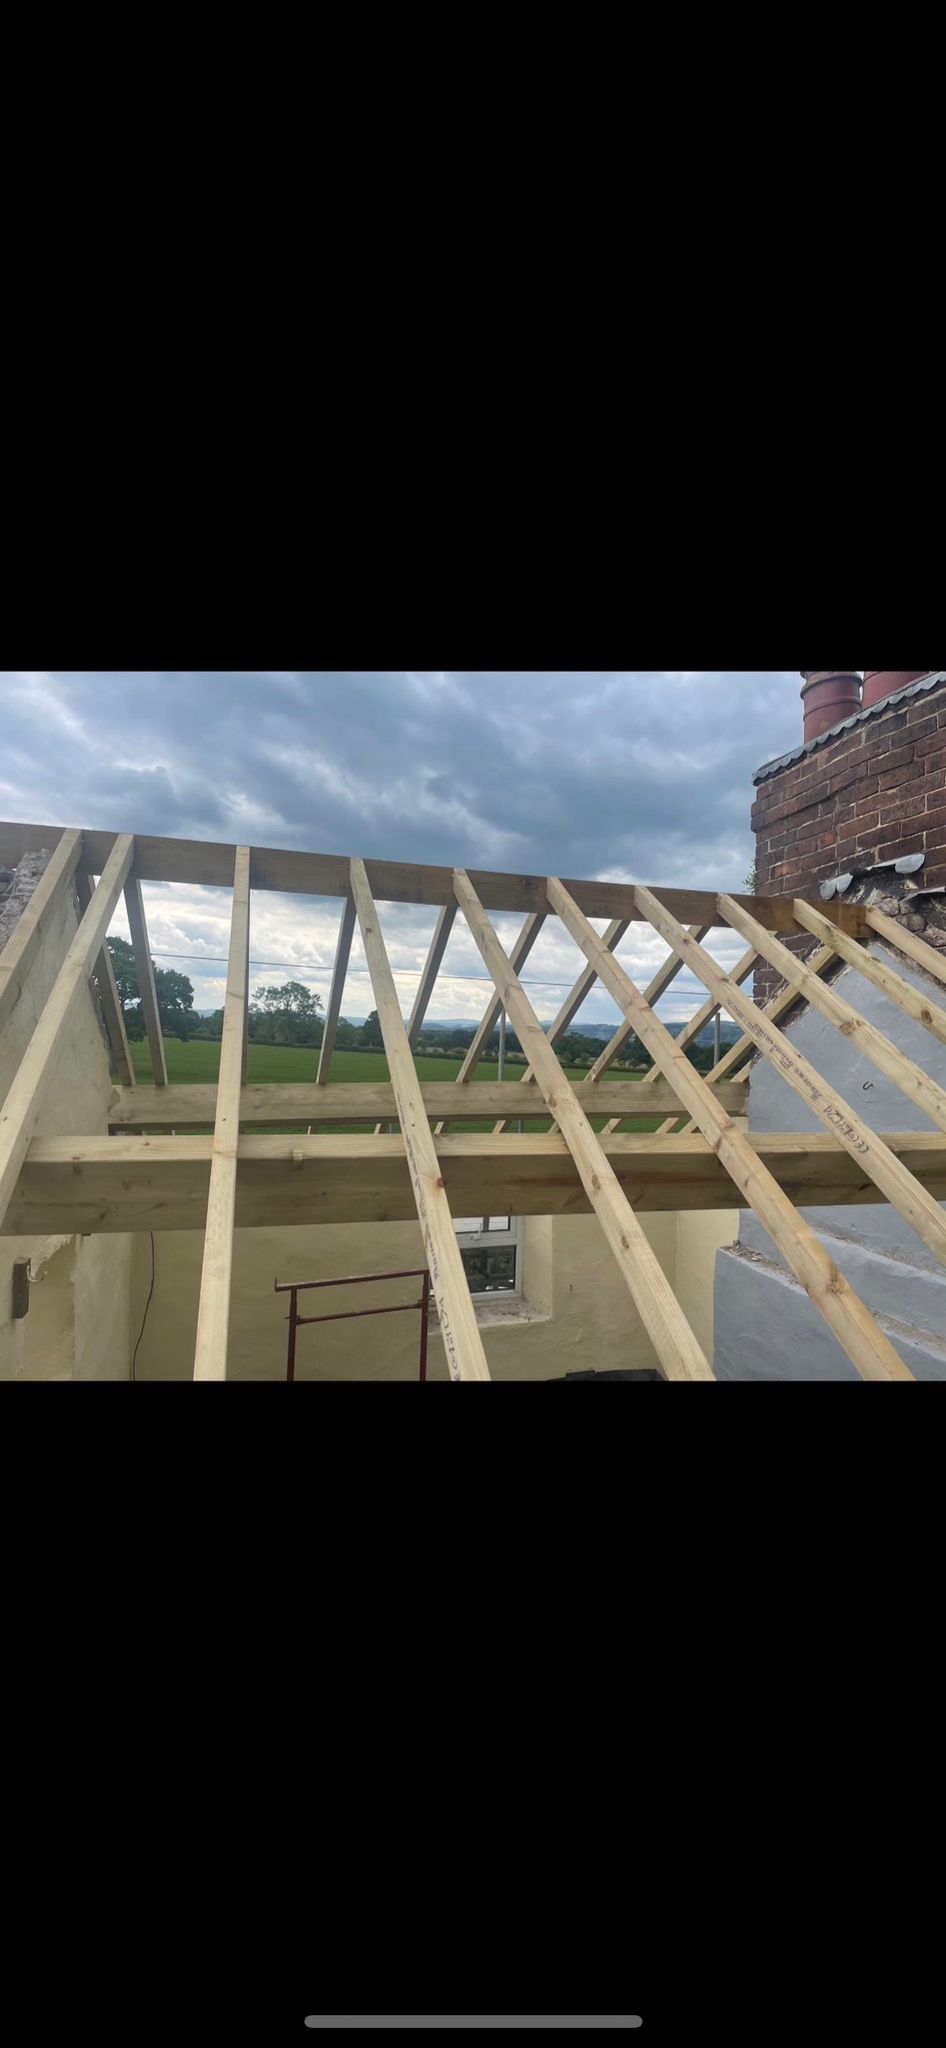 Timberwork Roof Contractors Gyrn Goch, LL54 - DD Roofing